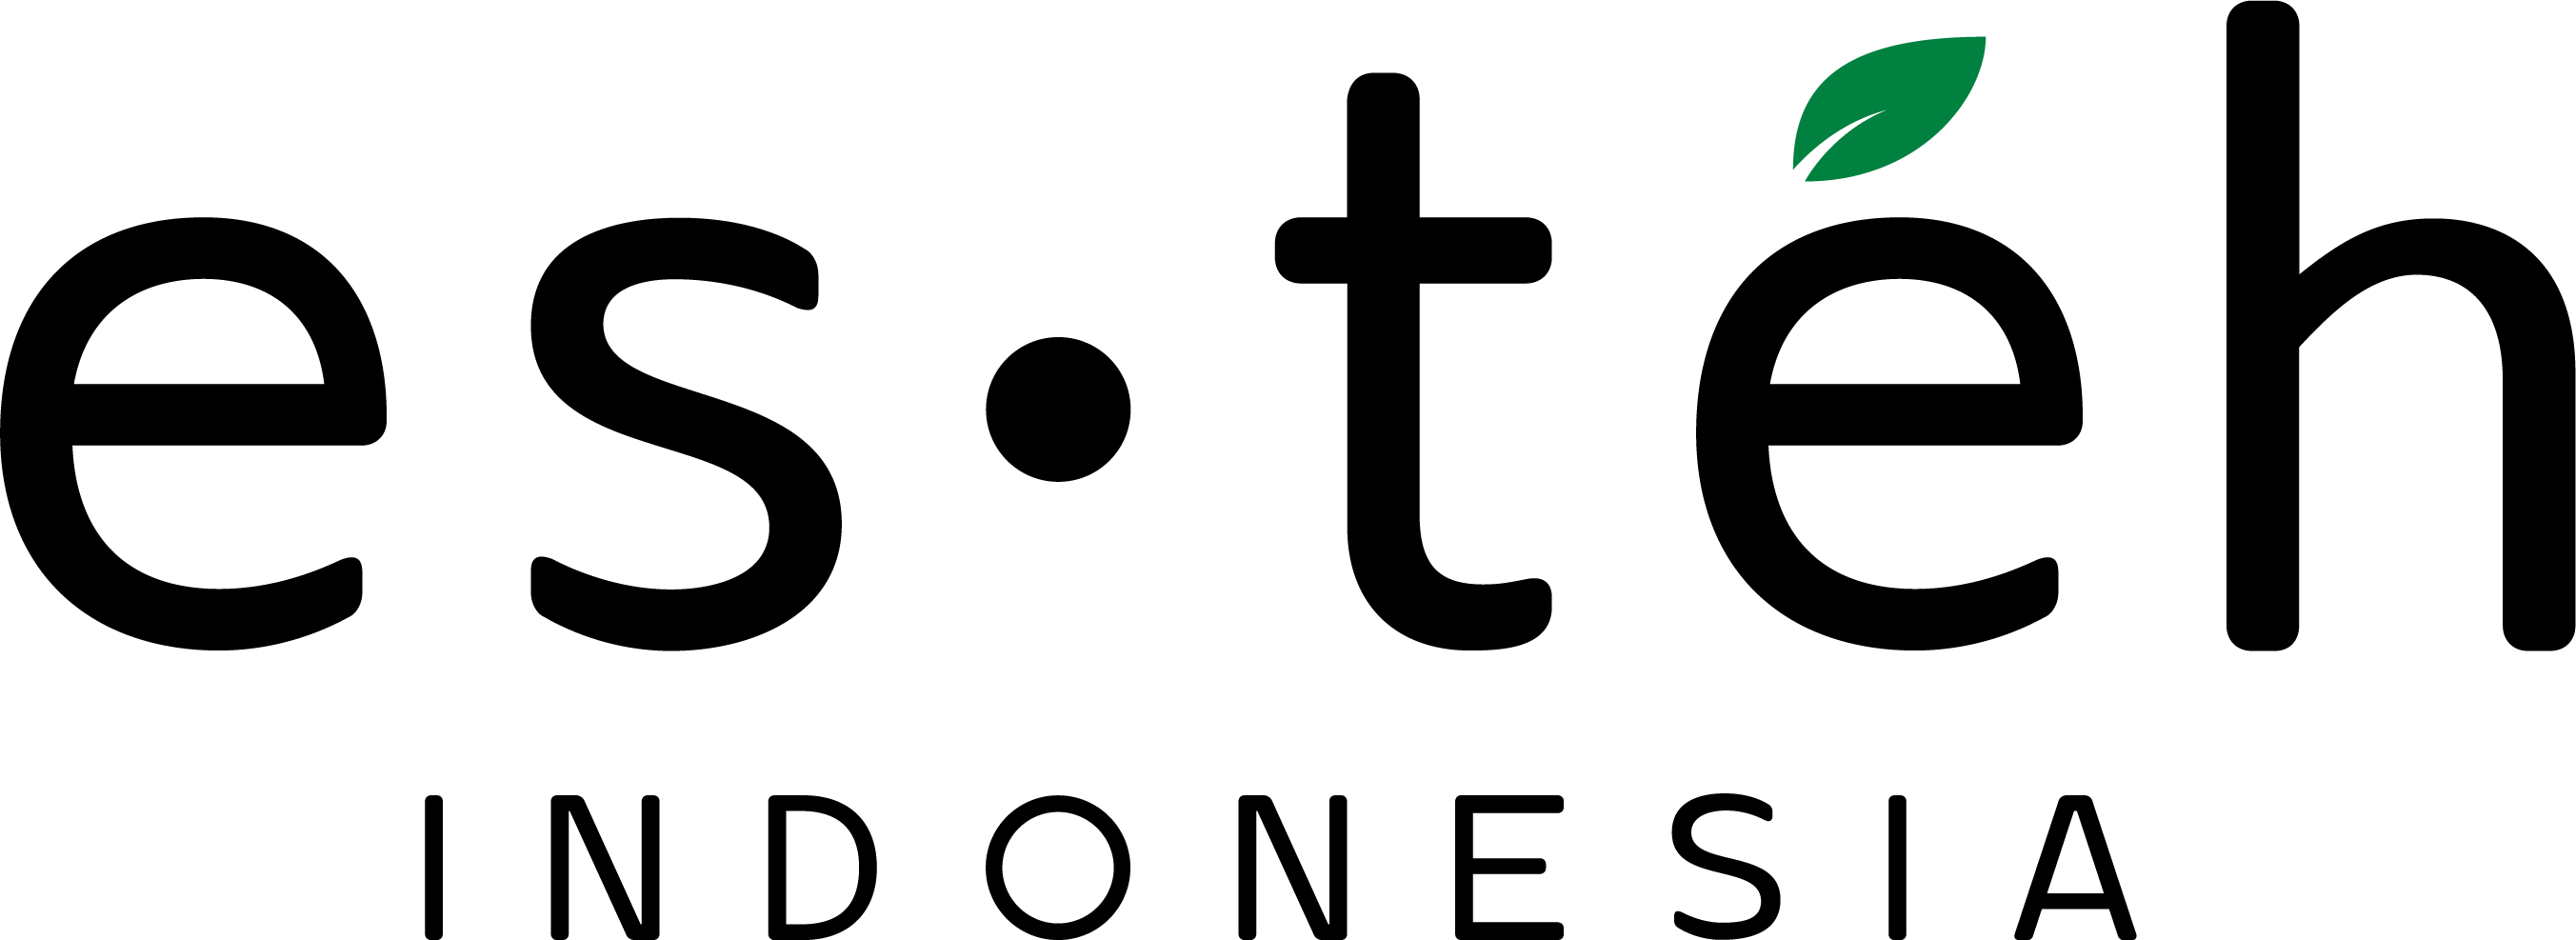 Es Teh Logo